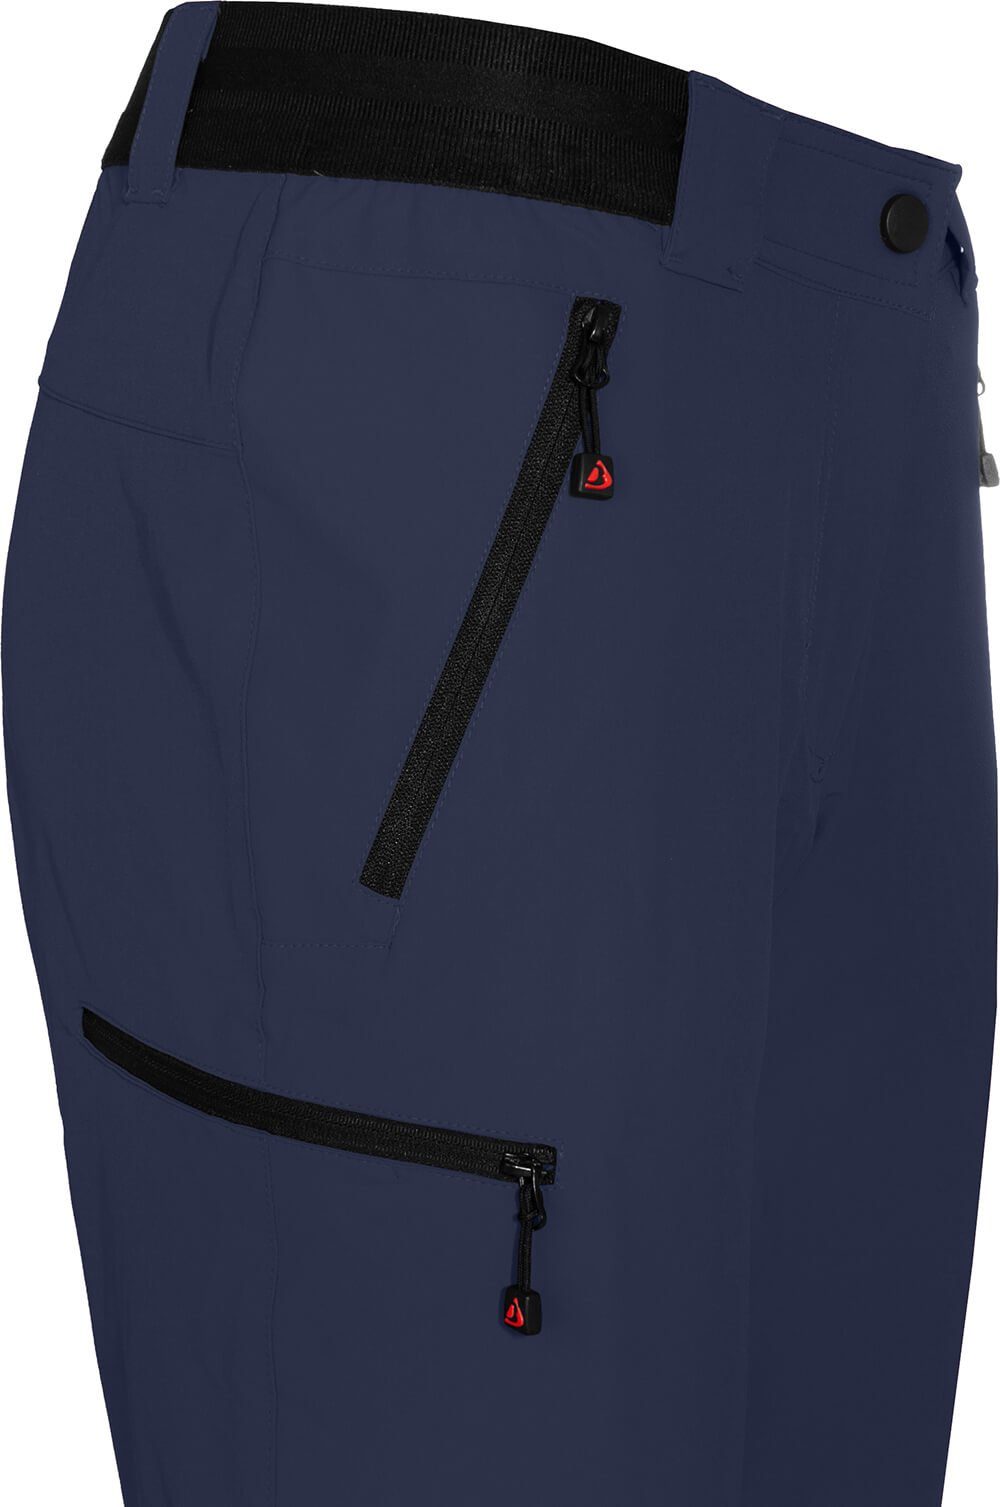 Bergson Zip-off-Hose VIDAA COMFORT blau Normalgrößen, Damen Wanderhose, peacoat strapazierfähig, leicht, Zipp-Off